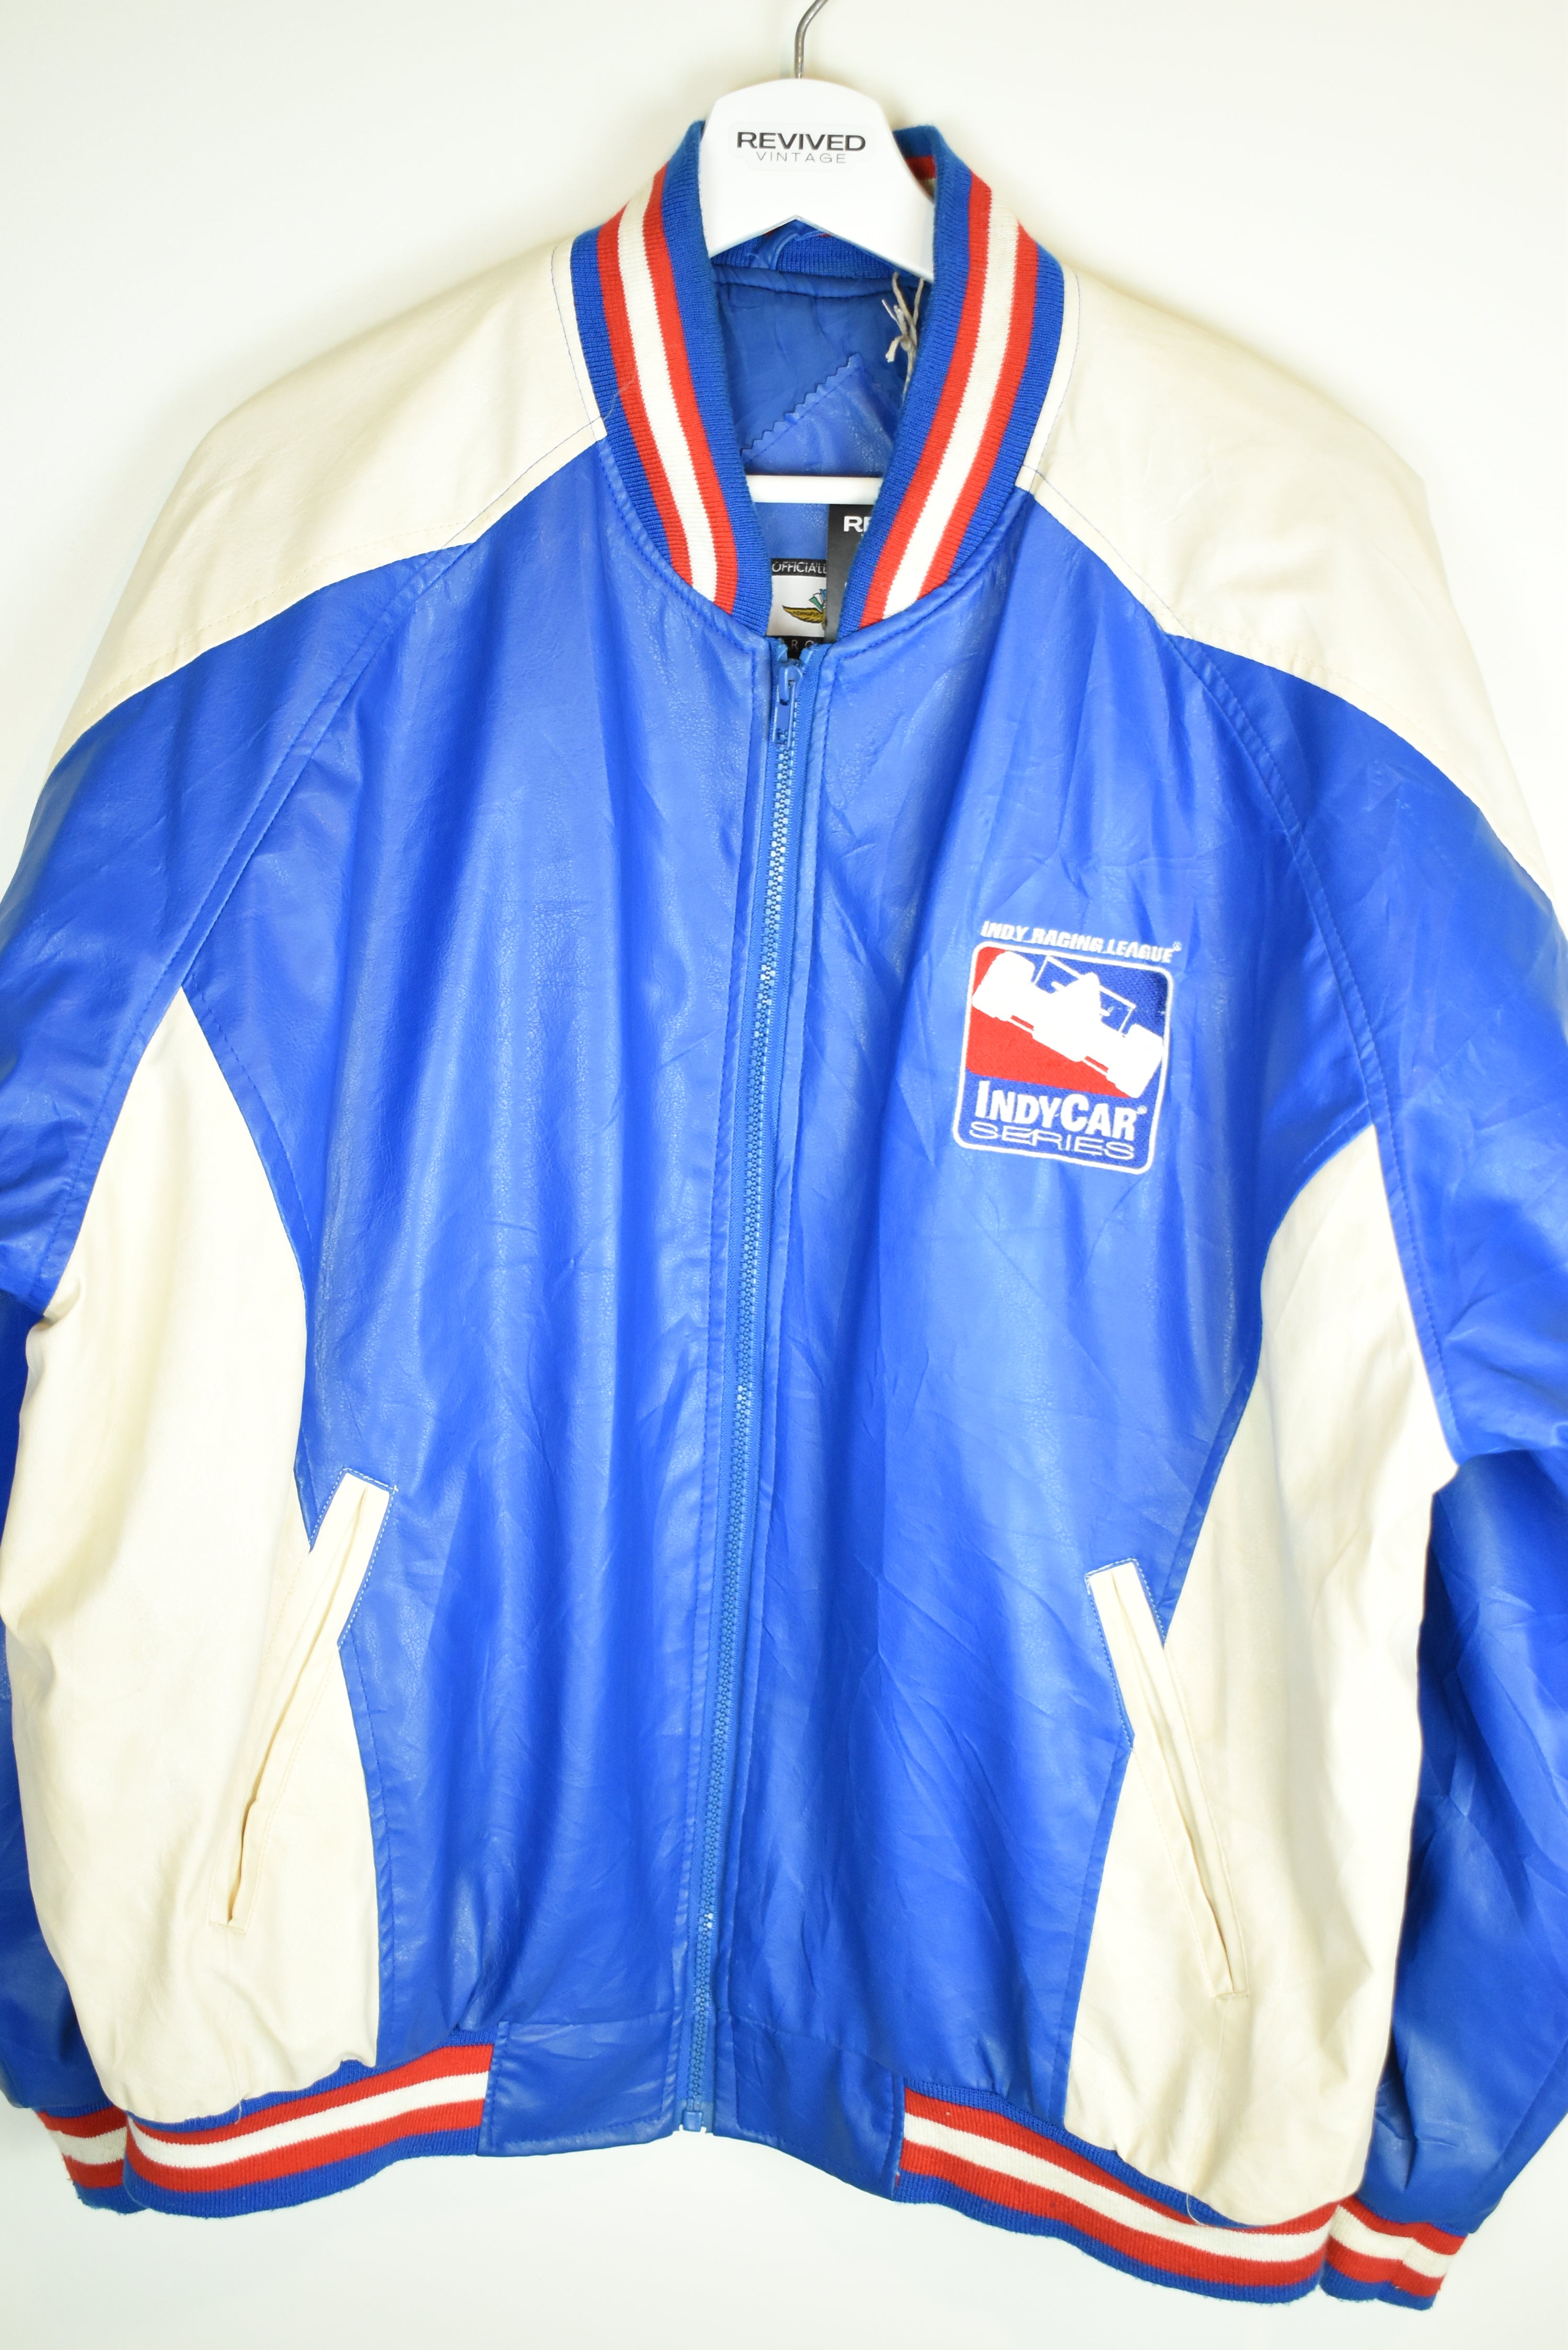 Vintage "Indy Car Racing League" Jacket Large | Vintage Clothing